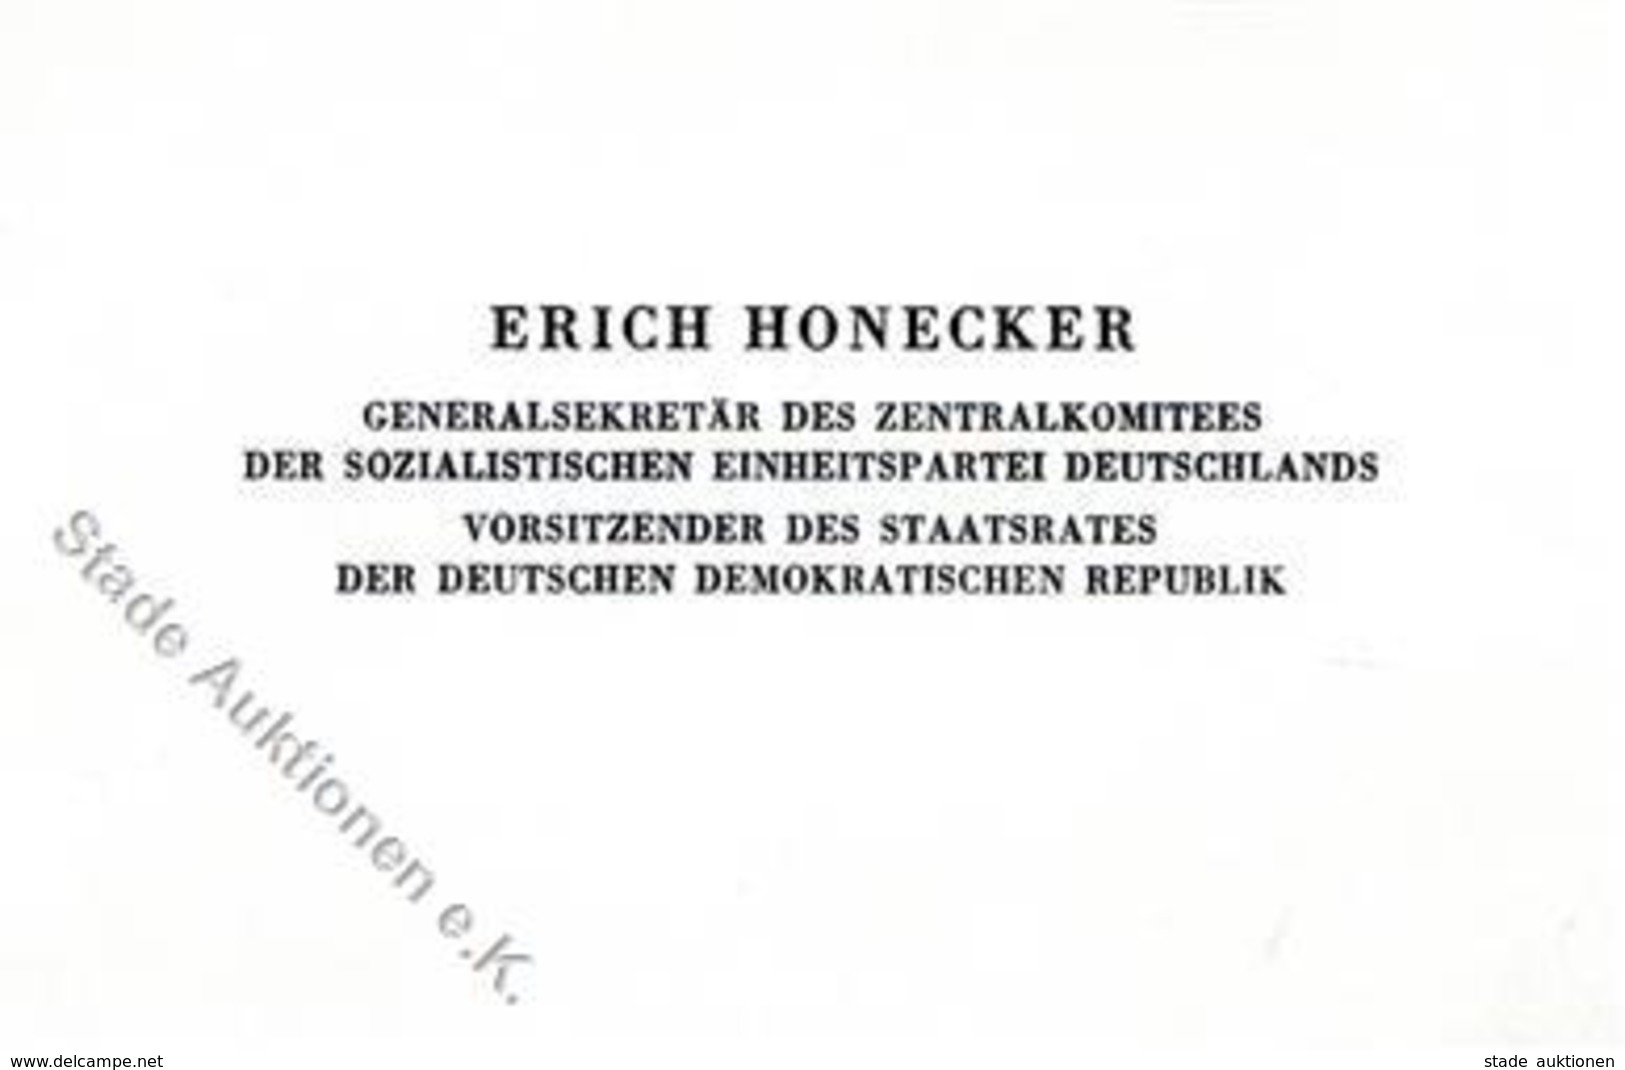 DDR - ERICH HONECKER - Original-Visitenkarte I - Events